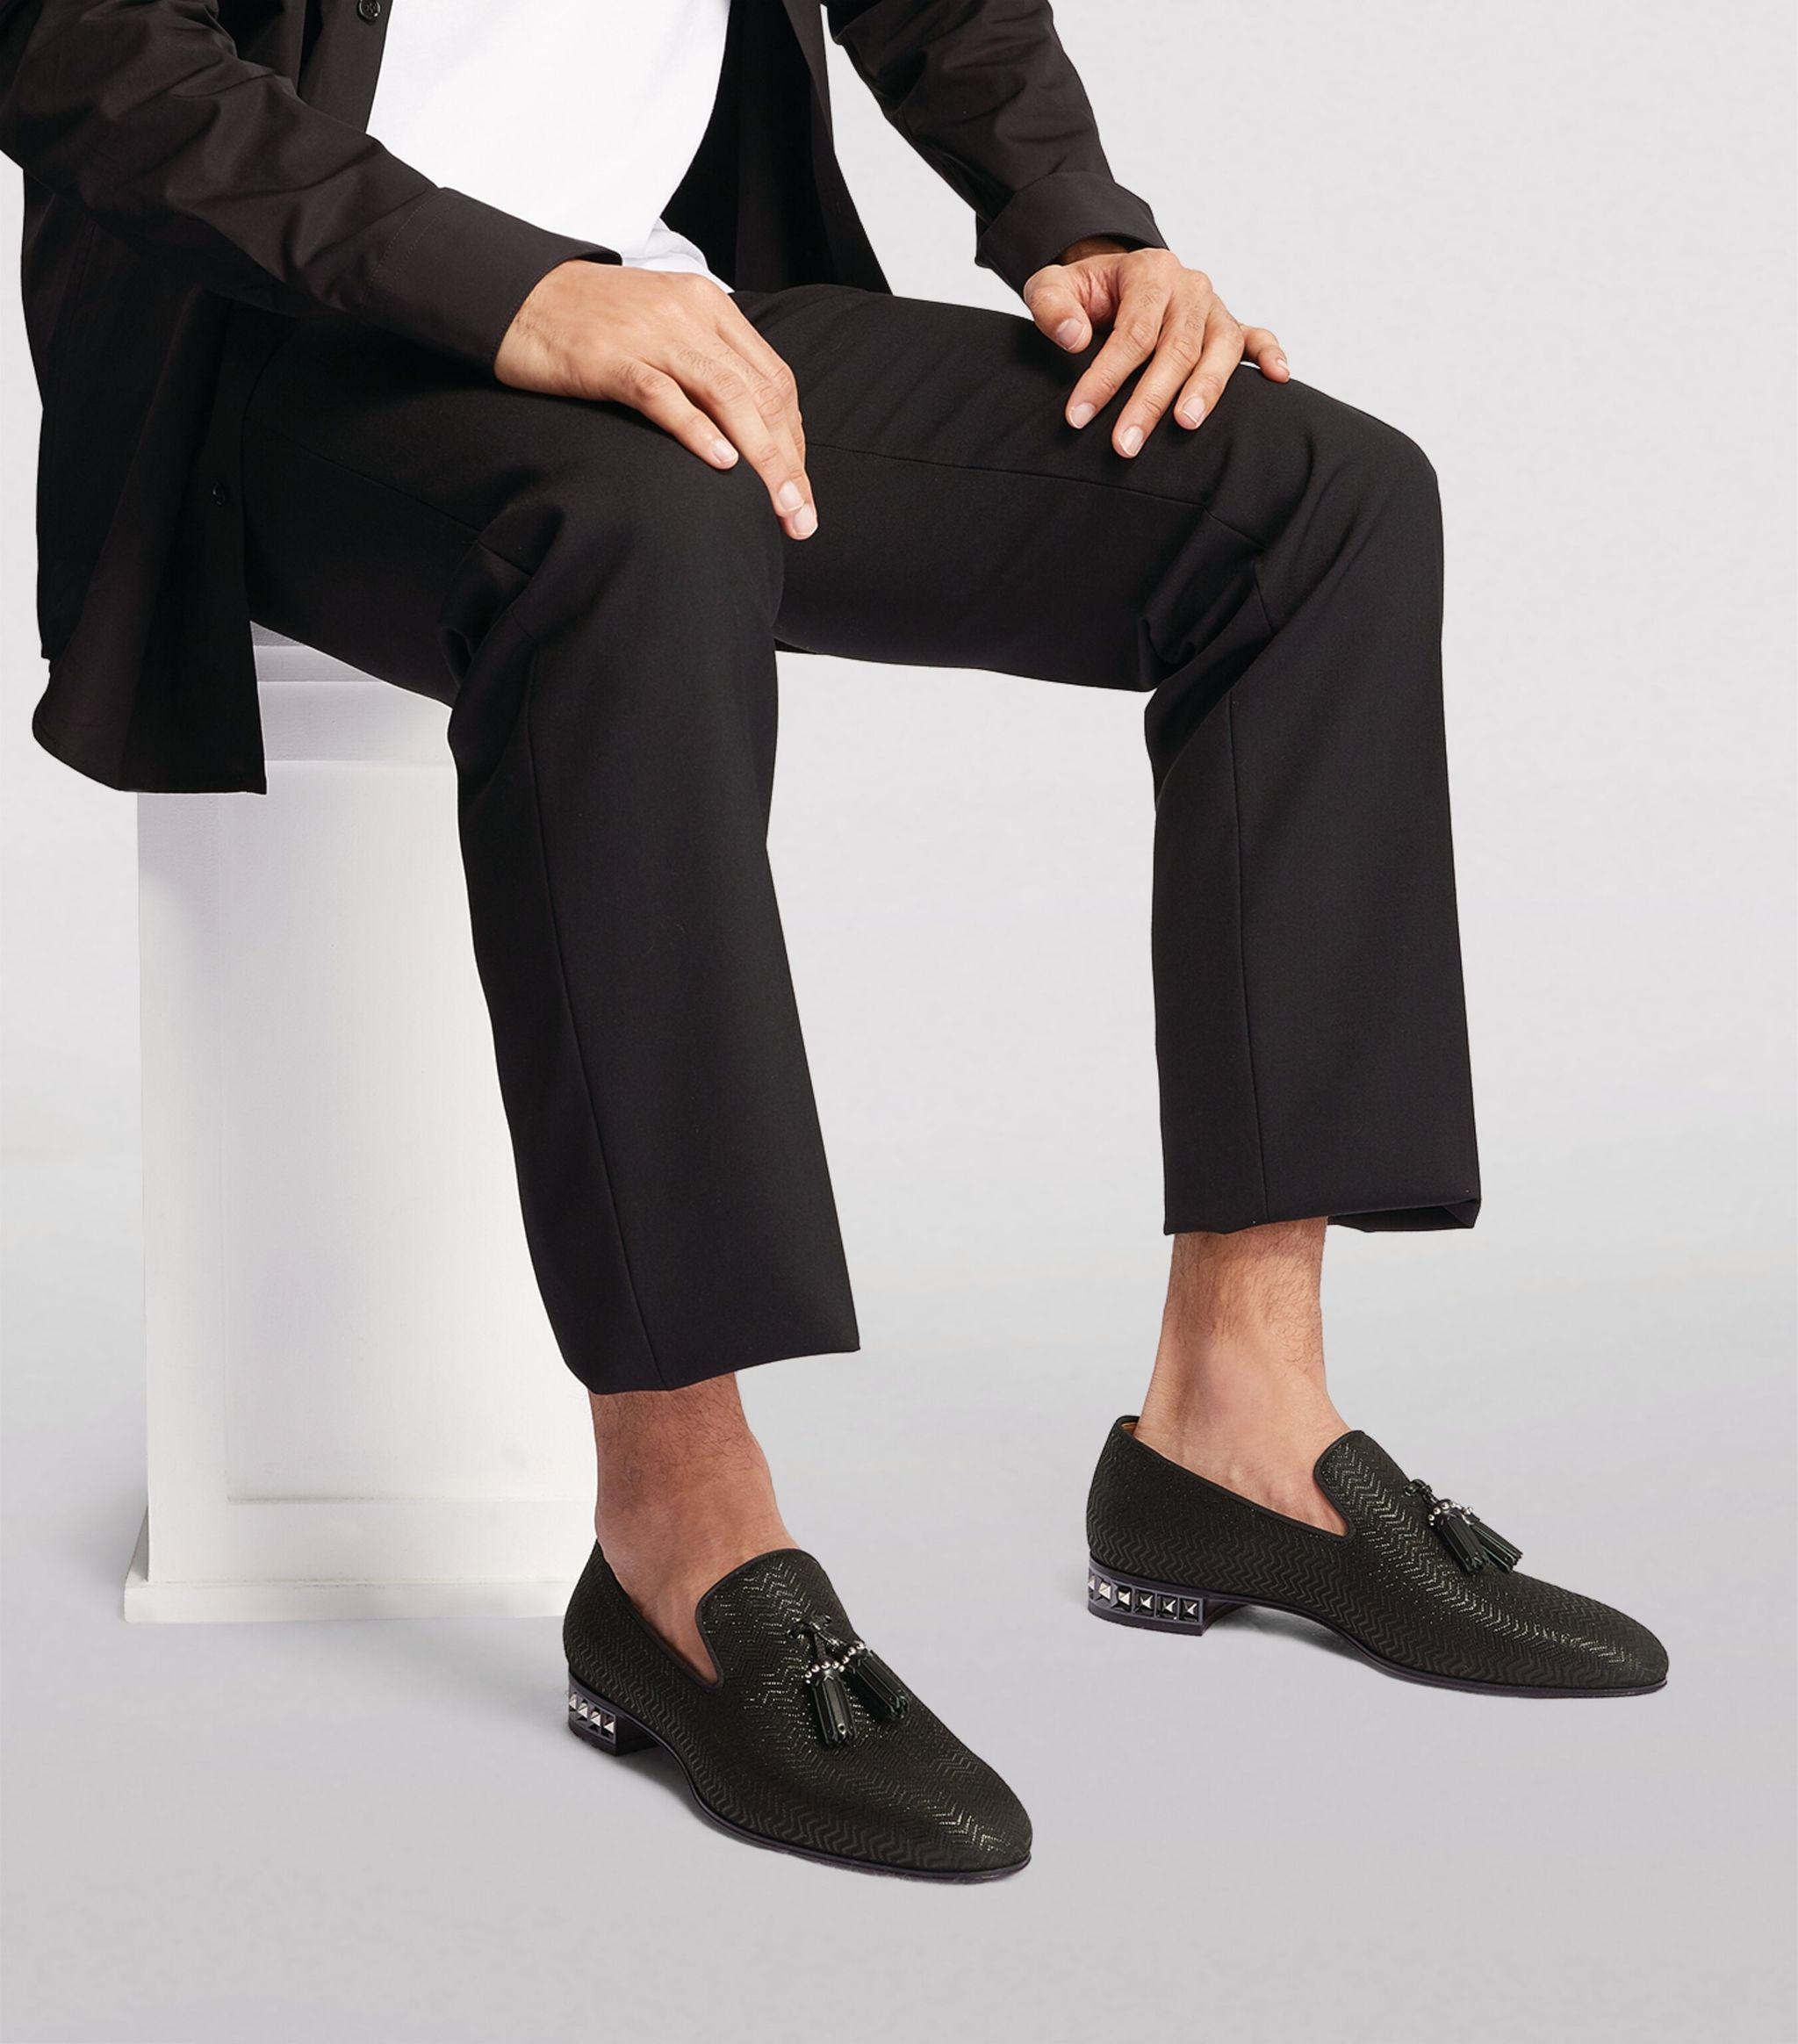 Men's Christian Louboutin Loafers & Slip-Ons